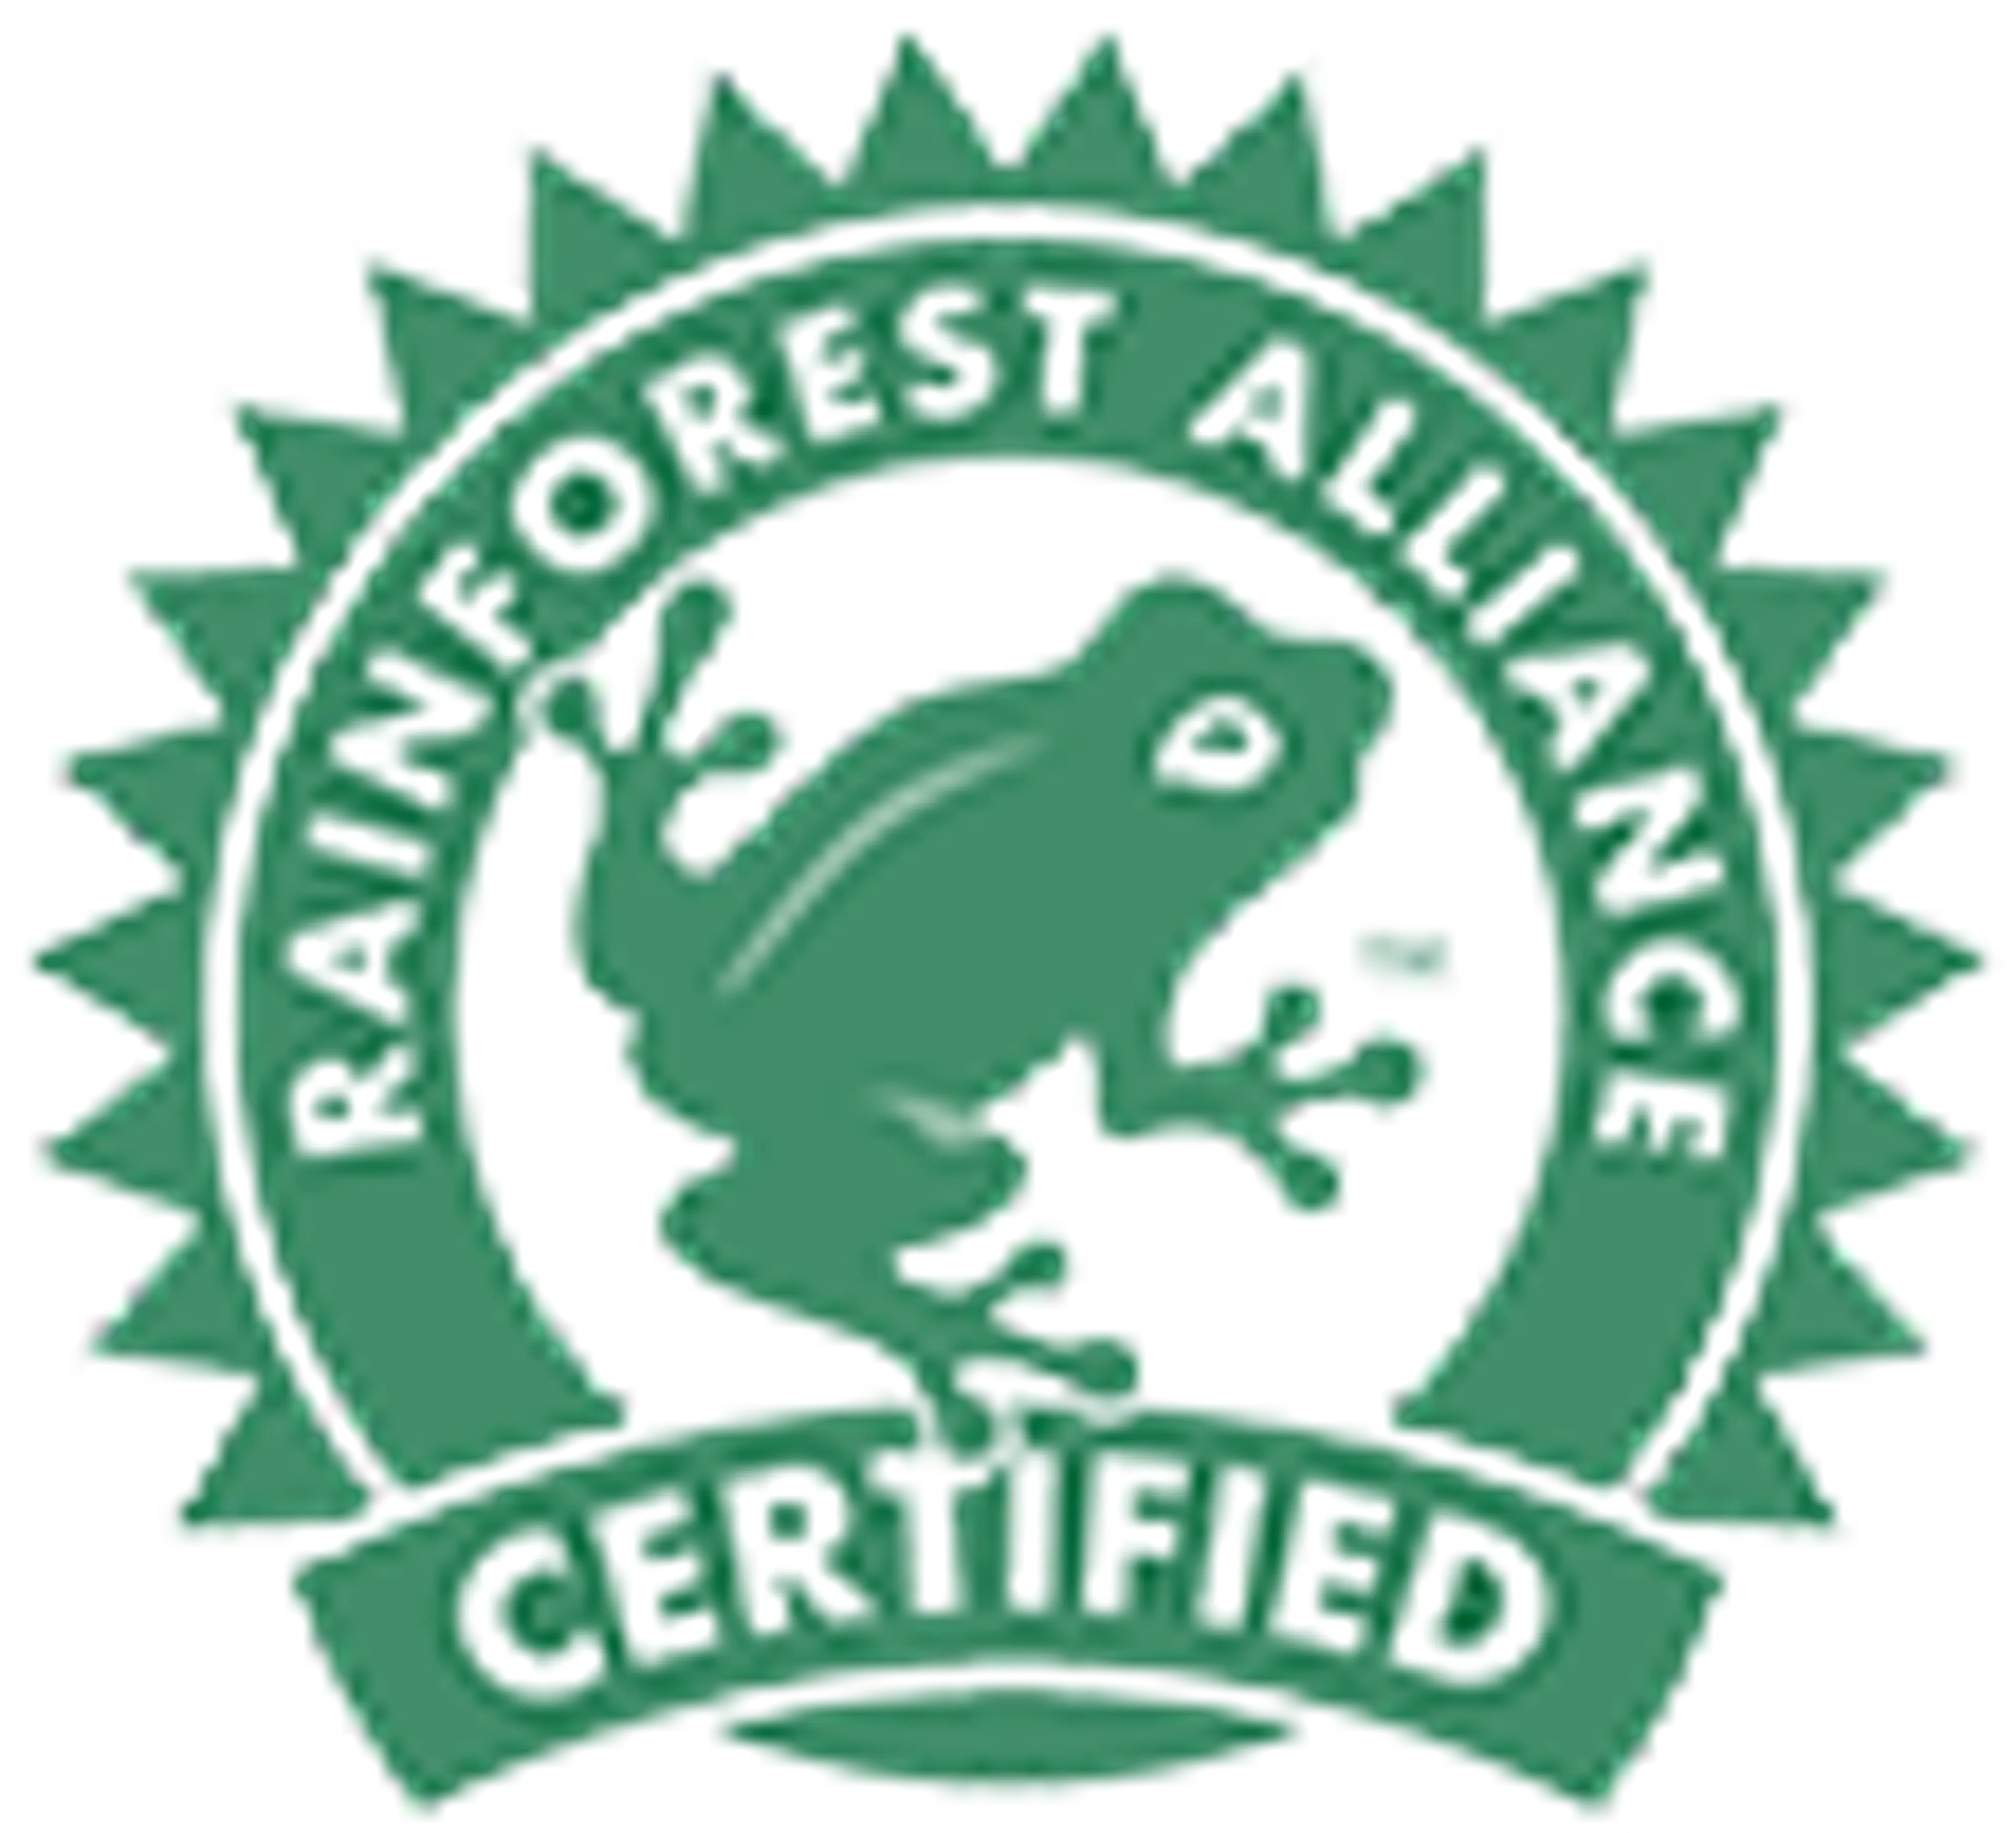 Rainforest Alliance-logo